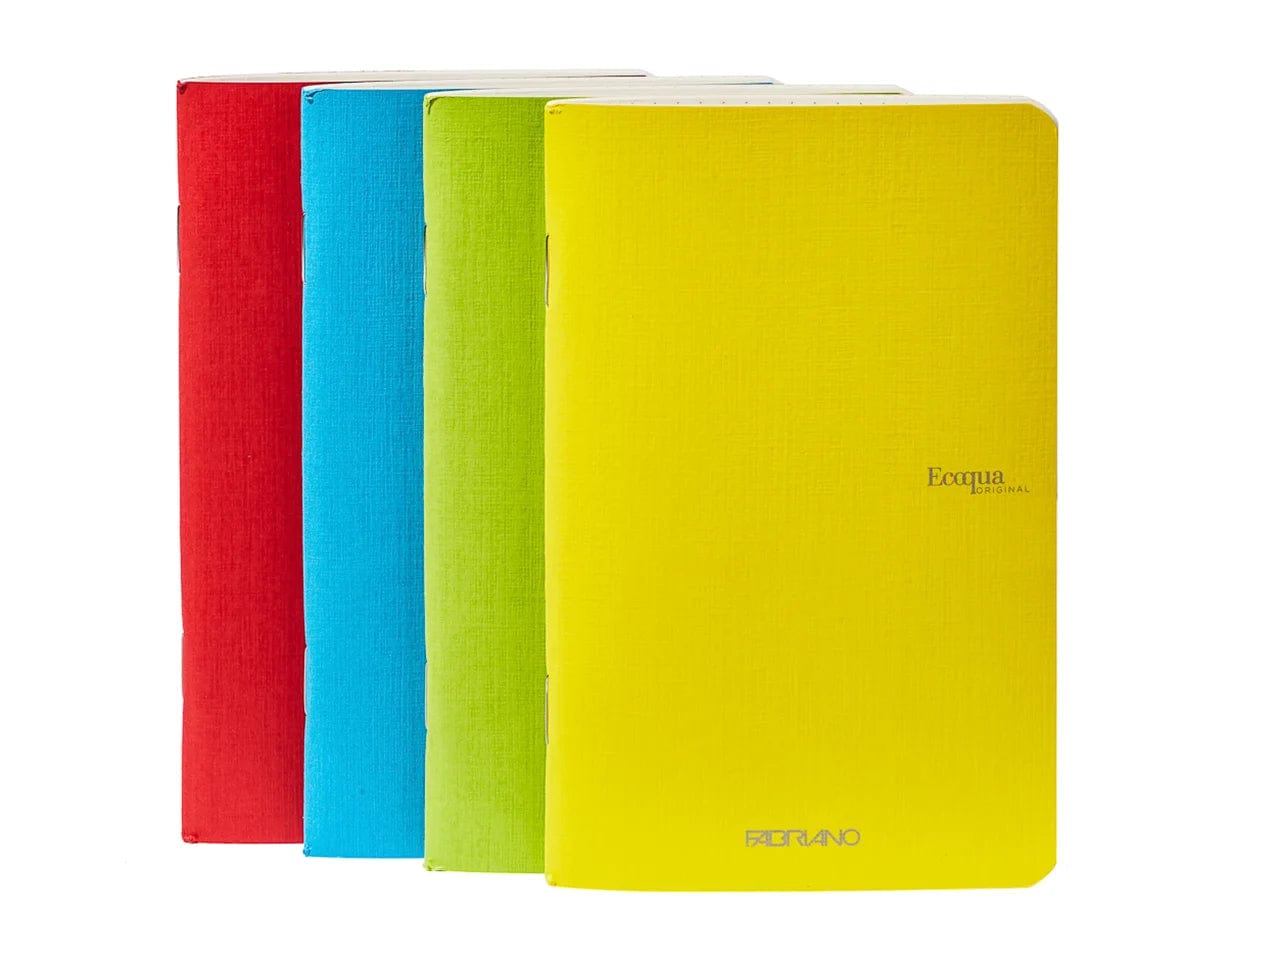 FABRIANO Ecoqua - Dot Pad BRIGHT COLOURS Fabriano - EcoQua - Pocket Size Dot Paper Notepads - Sets of 4